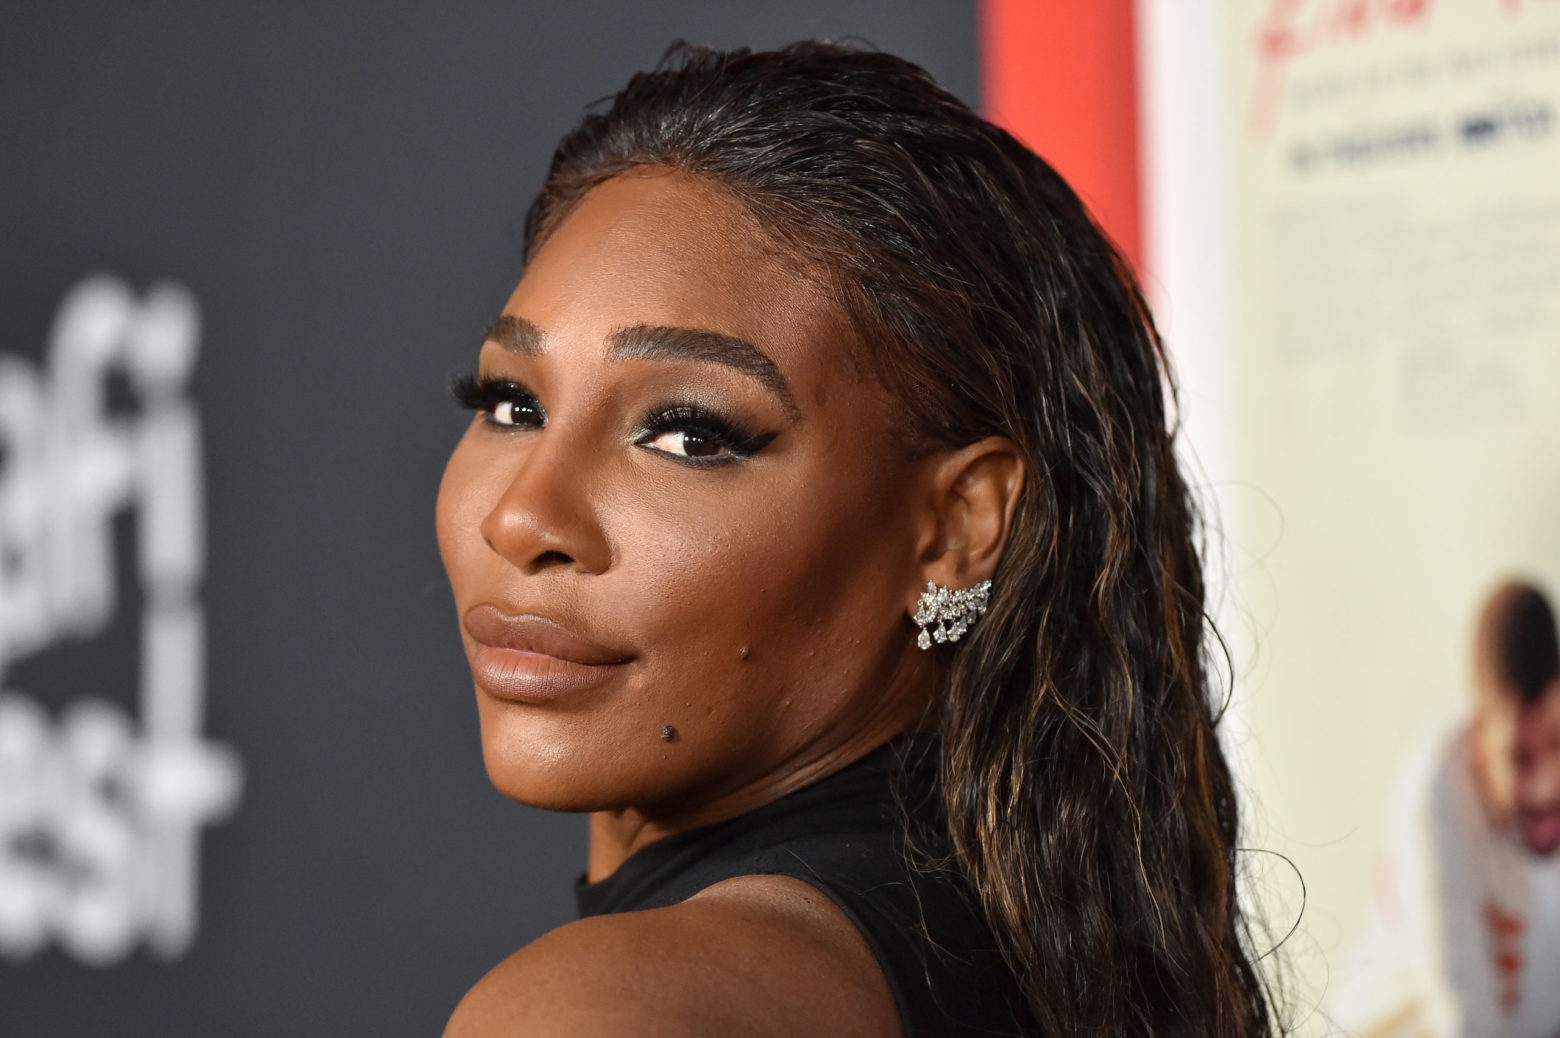 Serena Williams' Clean Beauty Brand Prioritizes Black Athletes - 21Ninety